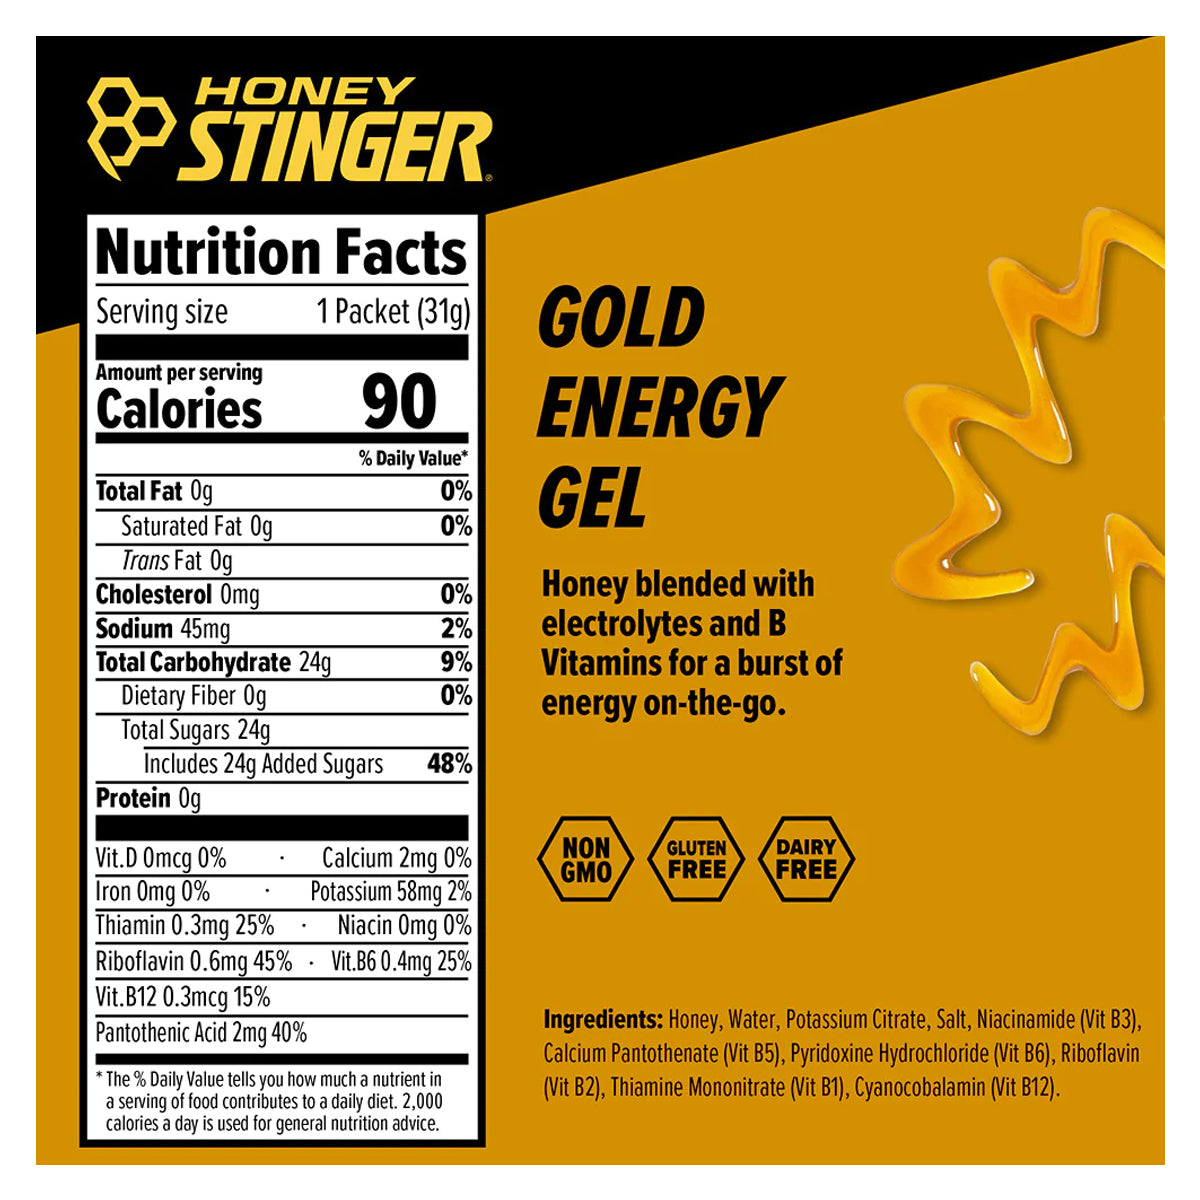 Honey Stinger Energy Gels in  by GOHUNT | Honey Stinger - GOHUNT Shop